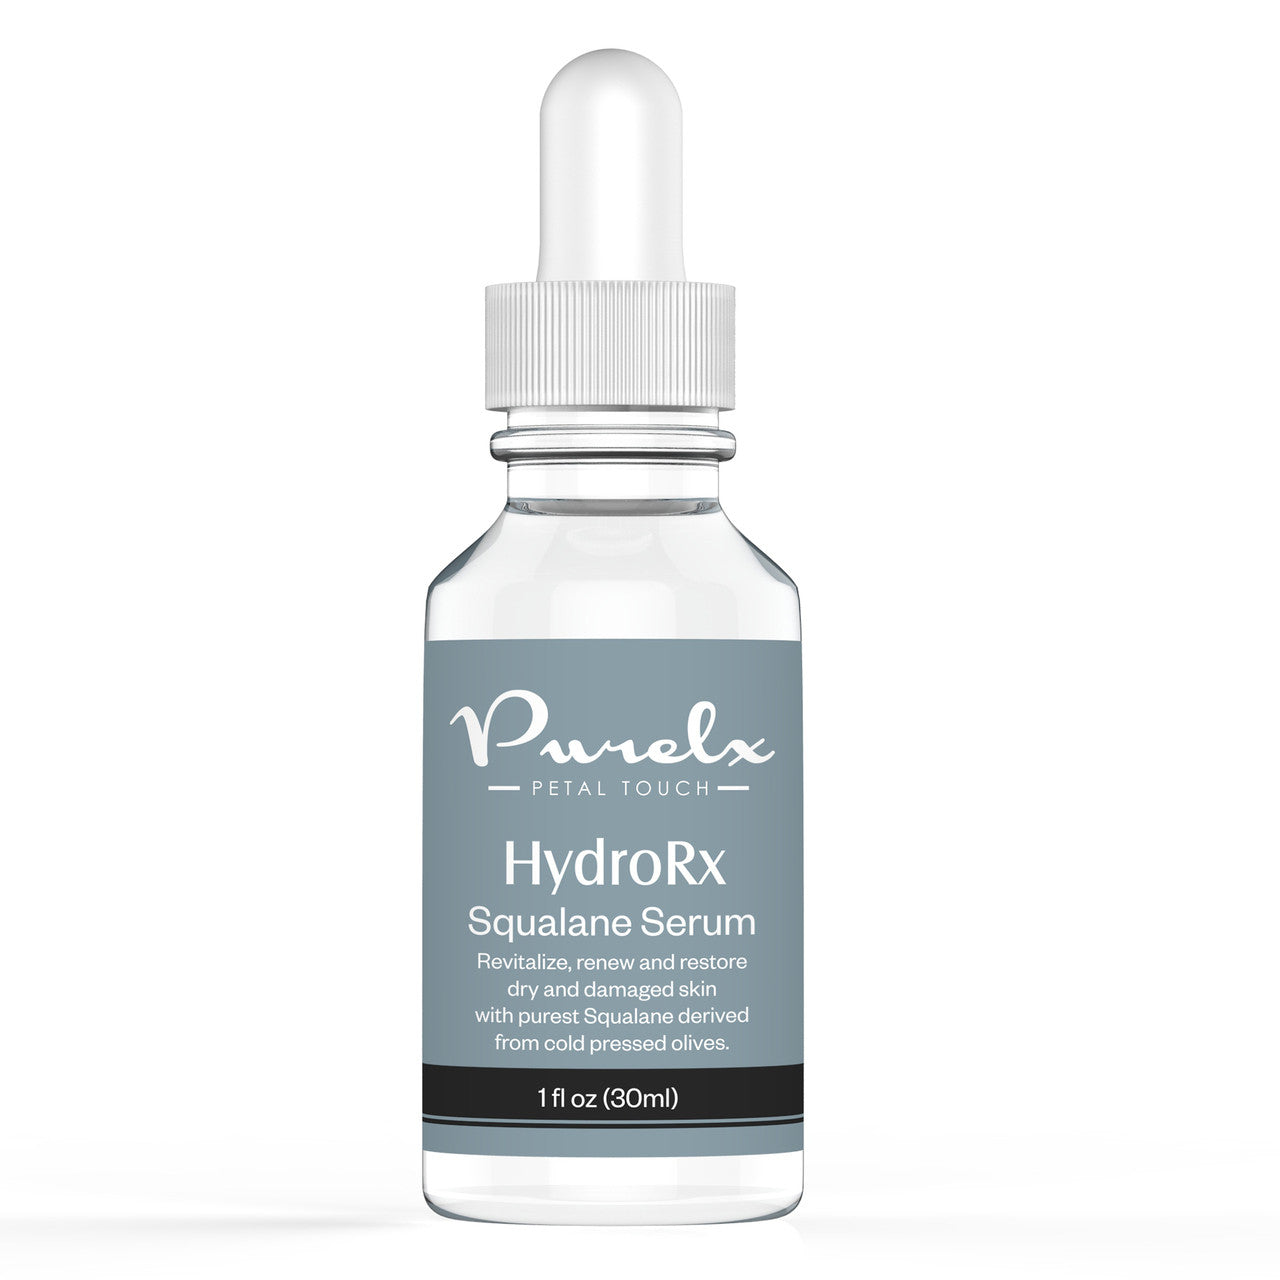 HydroRx Squalane Serum For Dry Damaged Skin